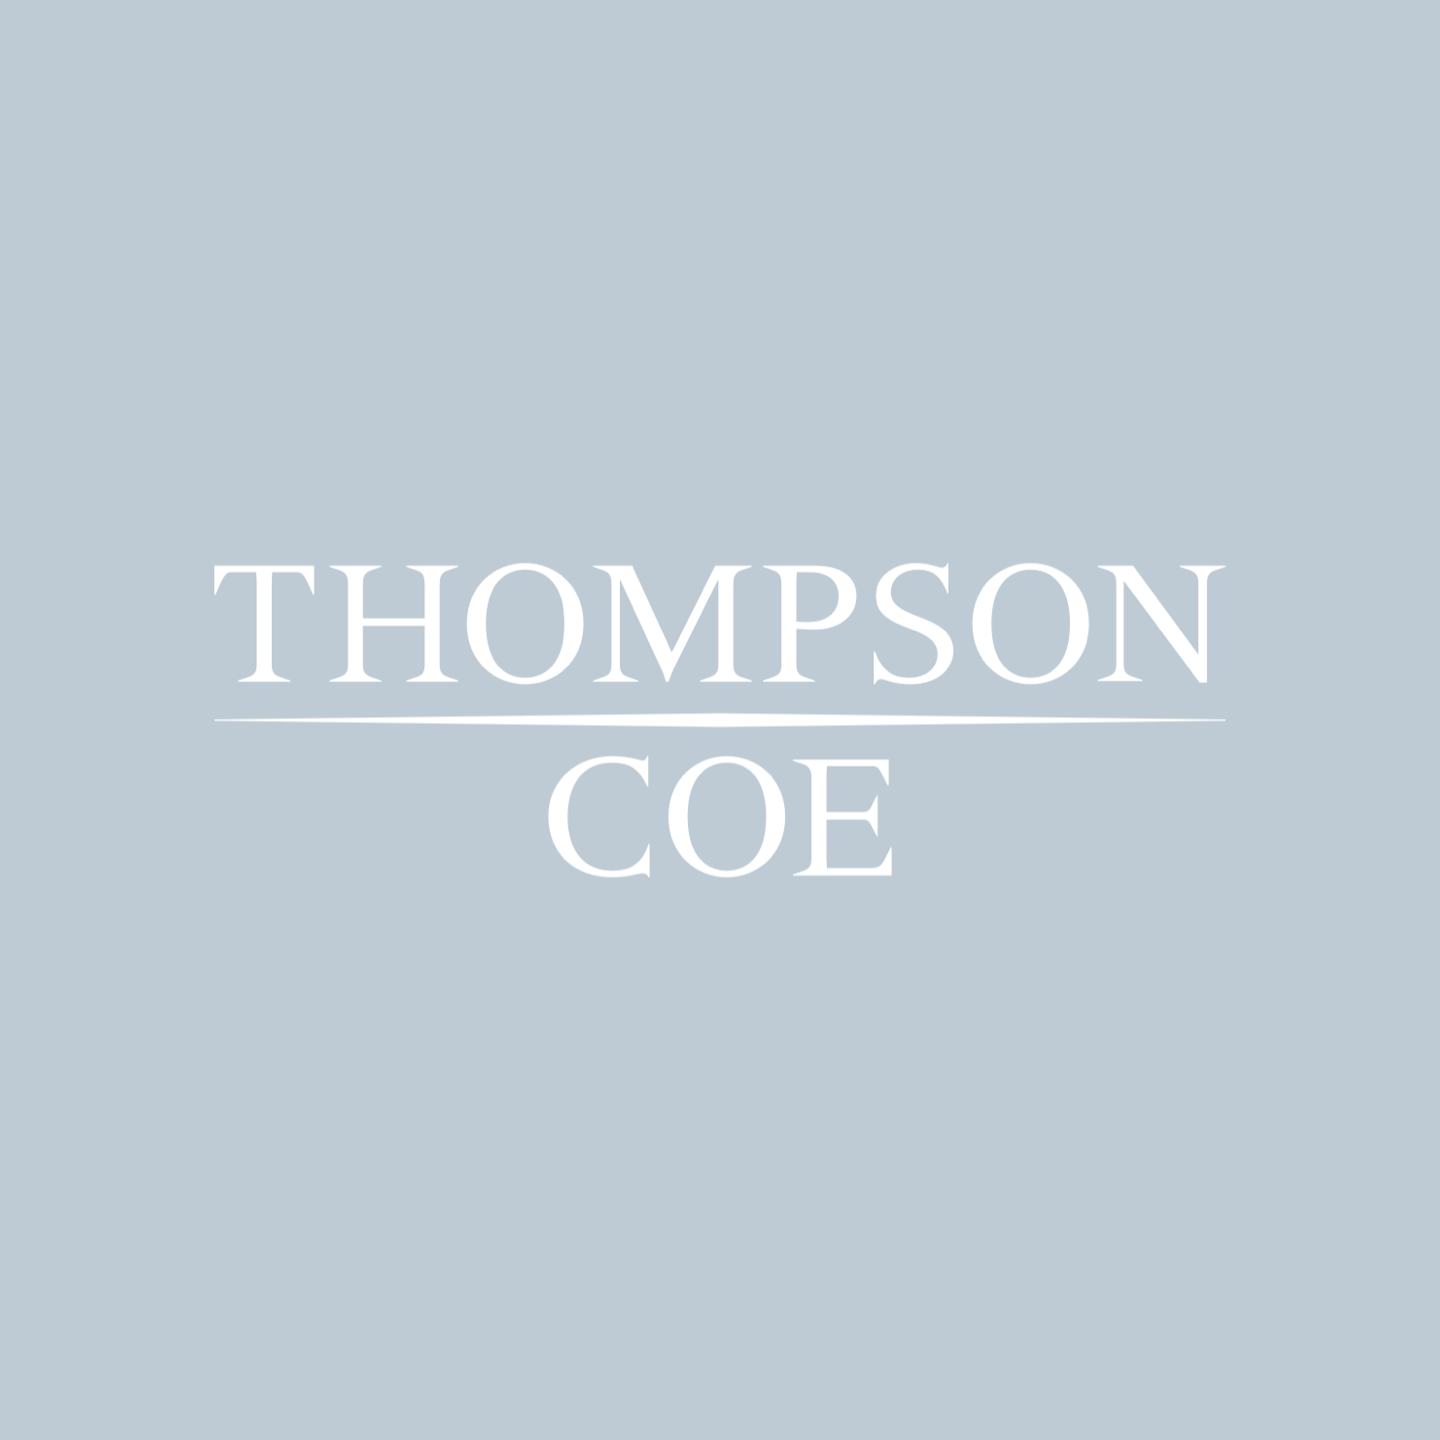 Thompson Coe logo